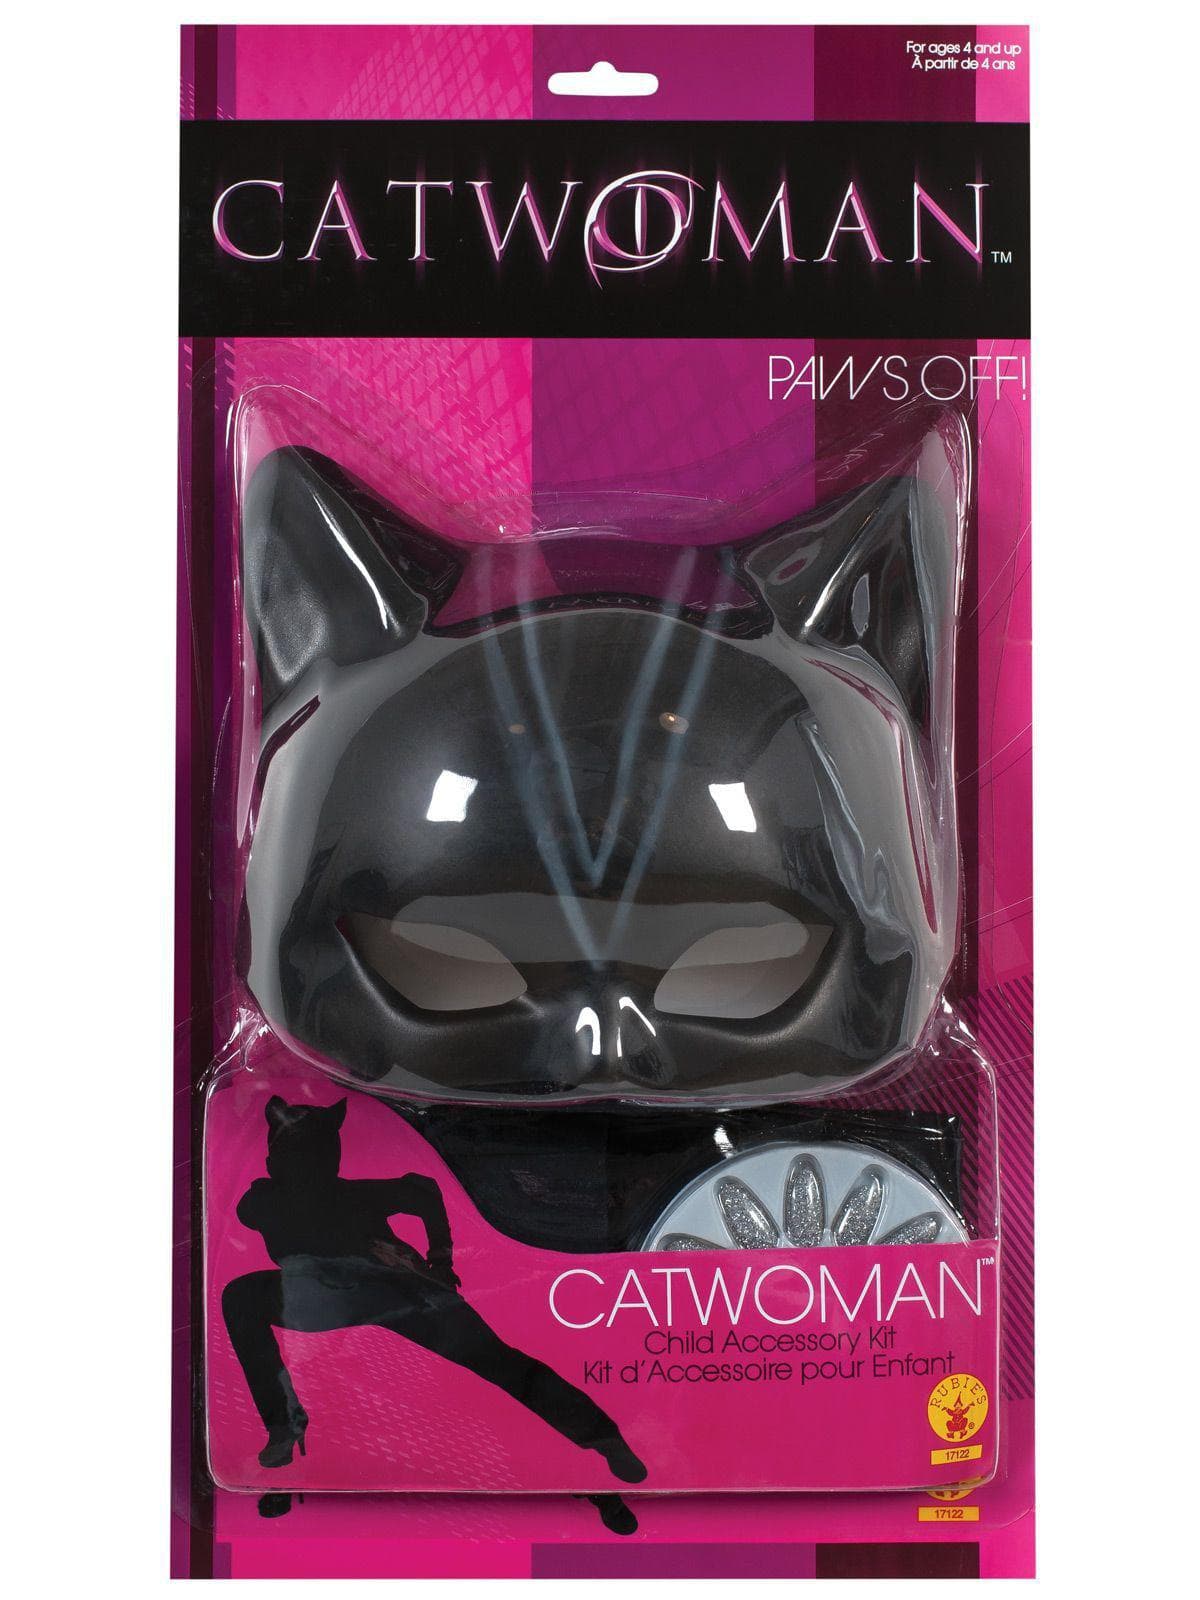 Child Catwoman Blister Kit - costumes.com